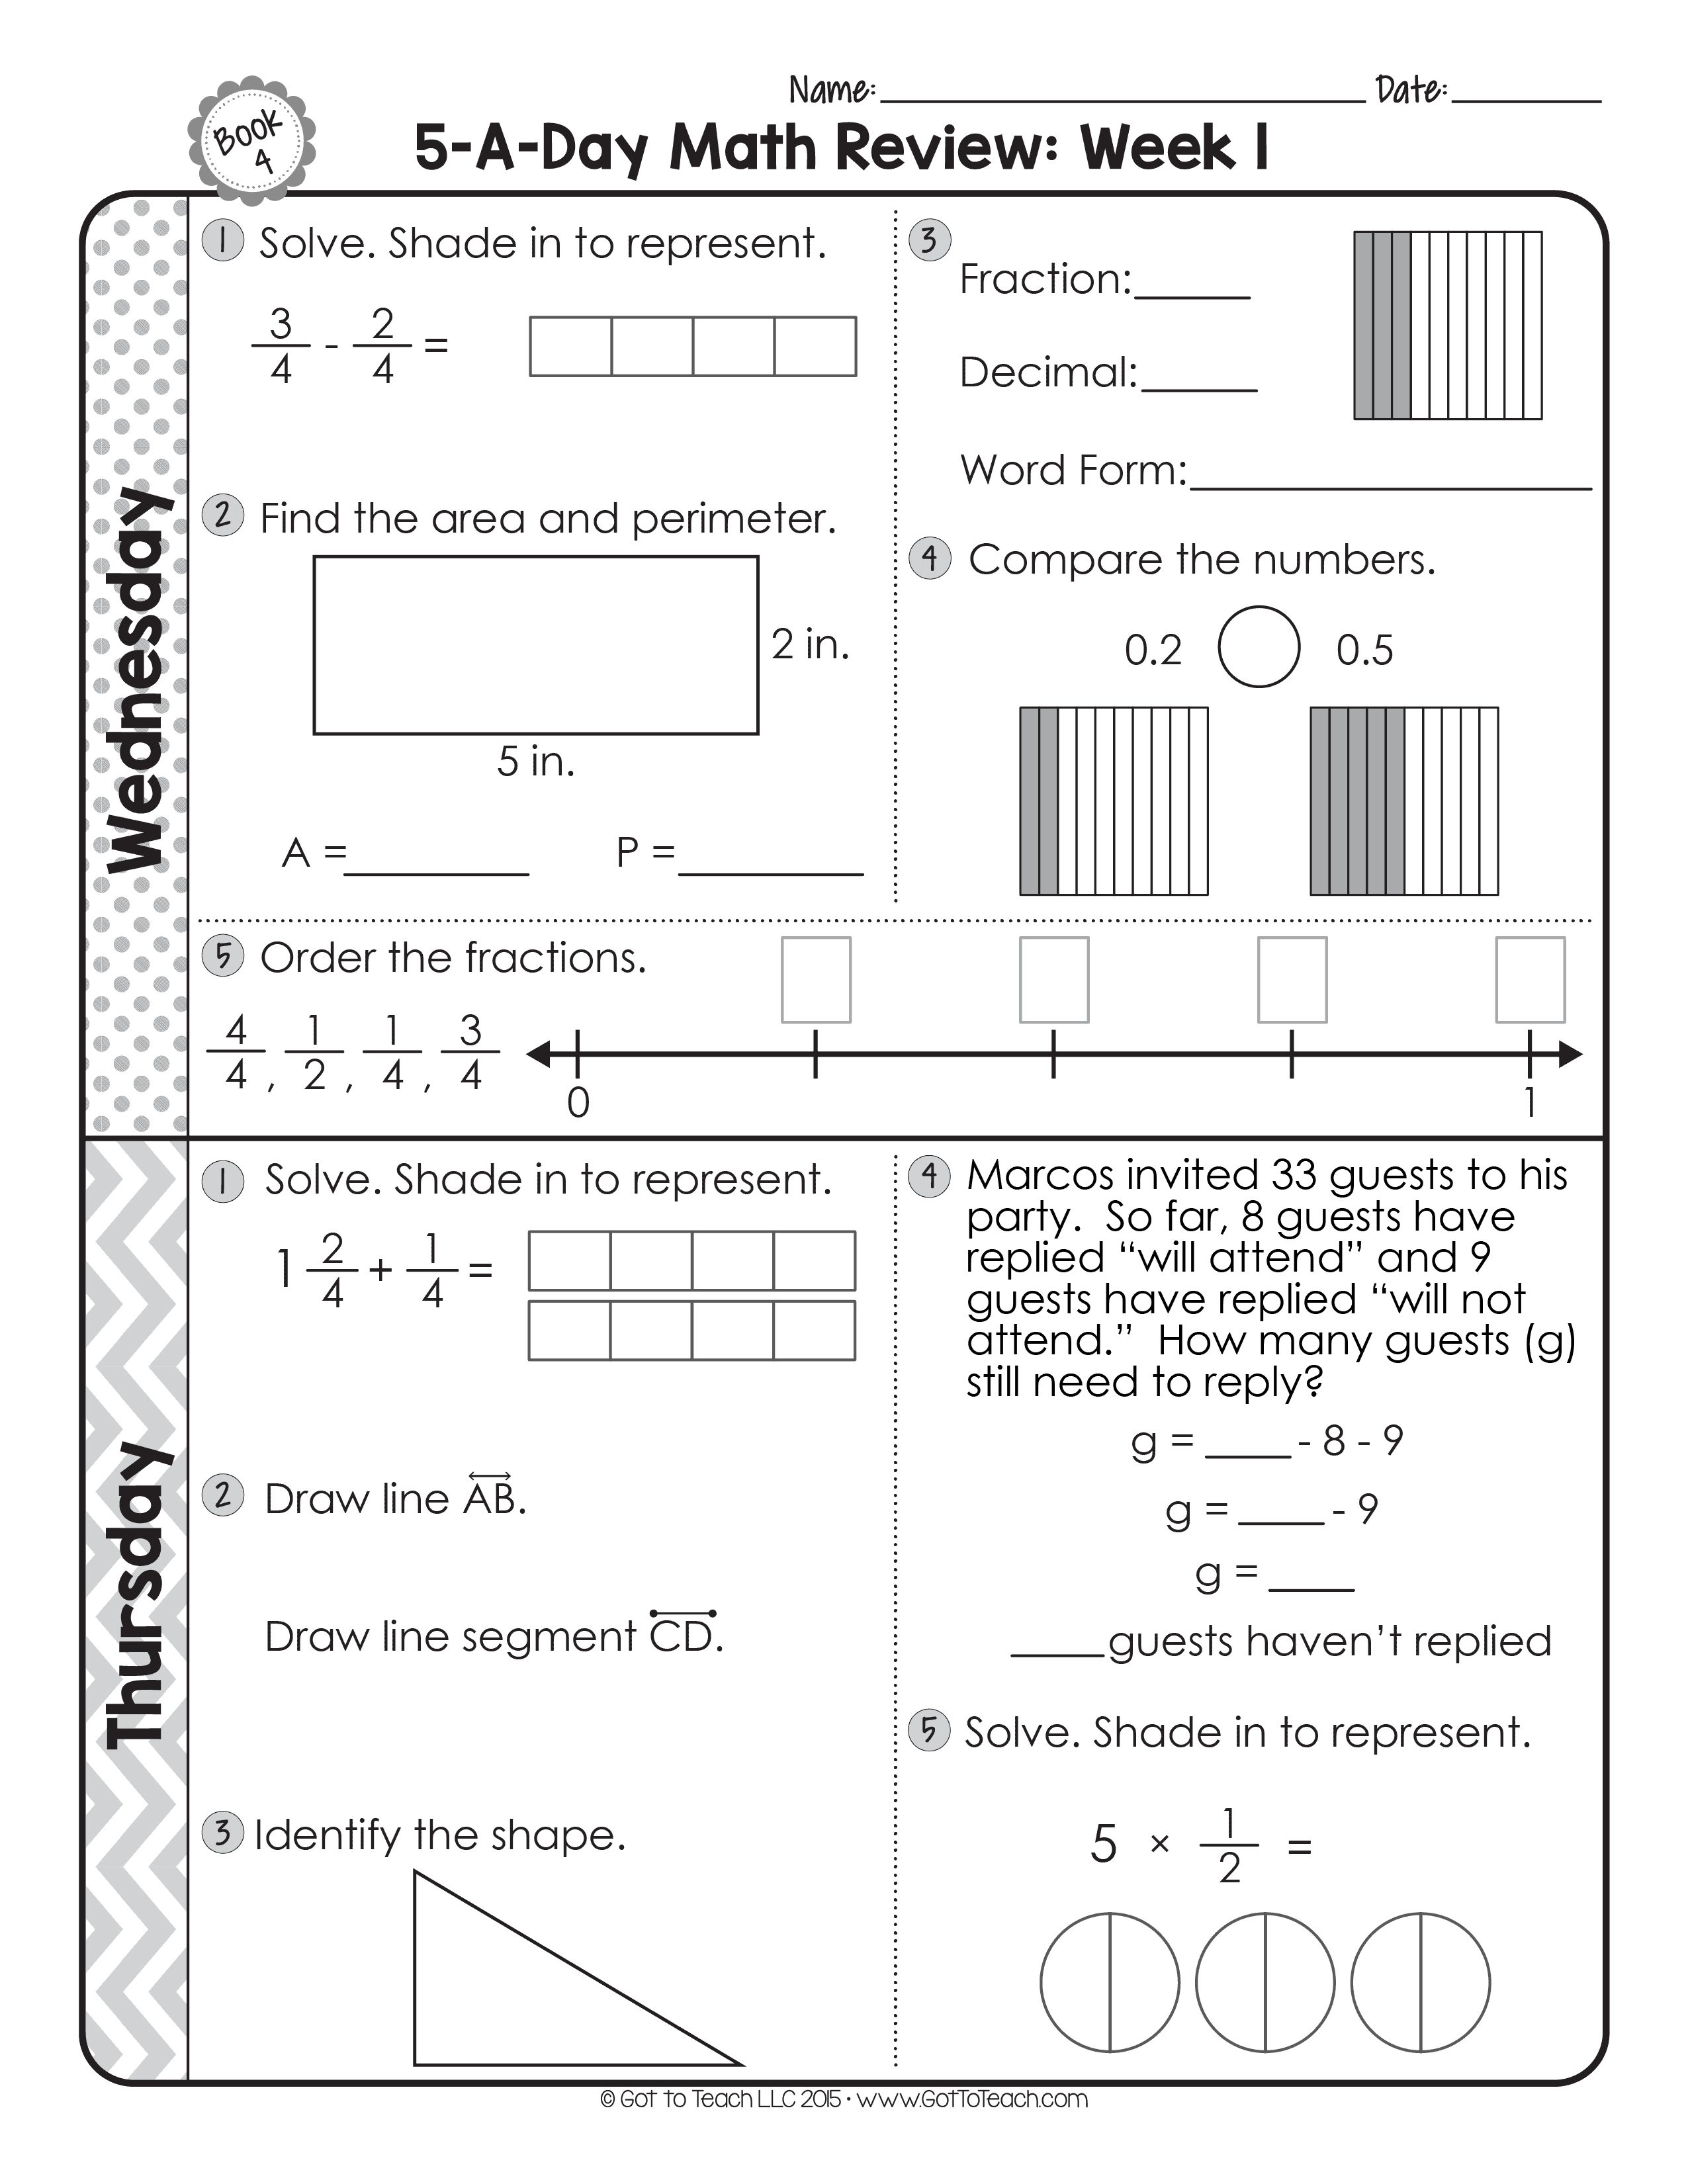 4th grade math review